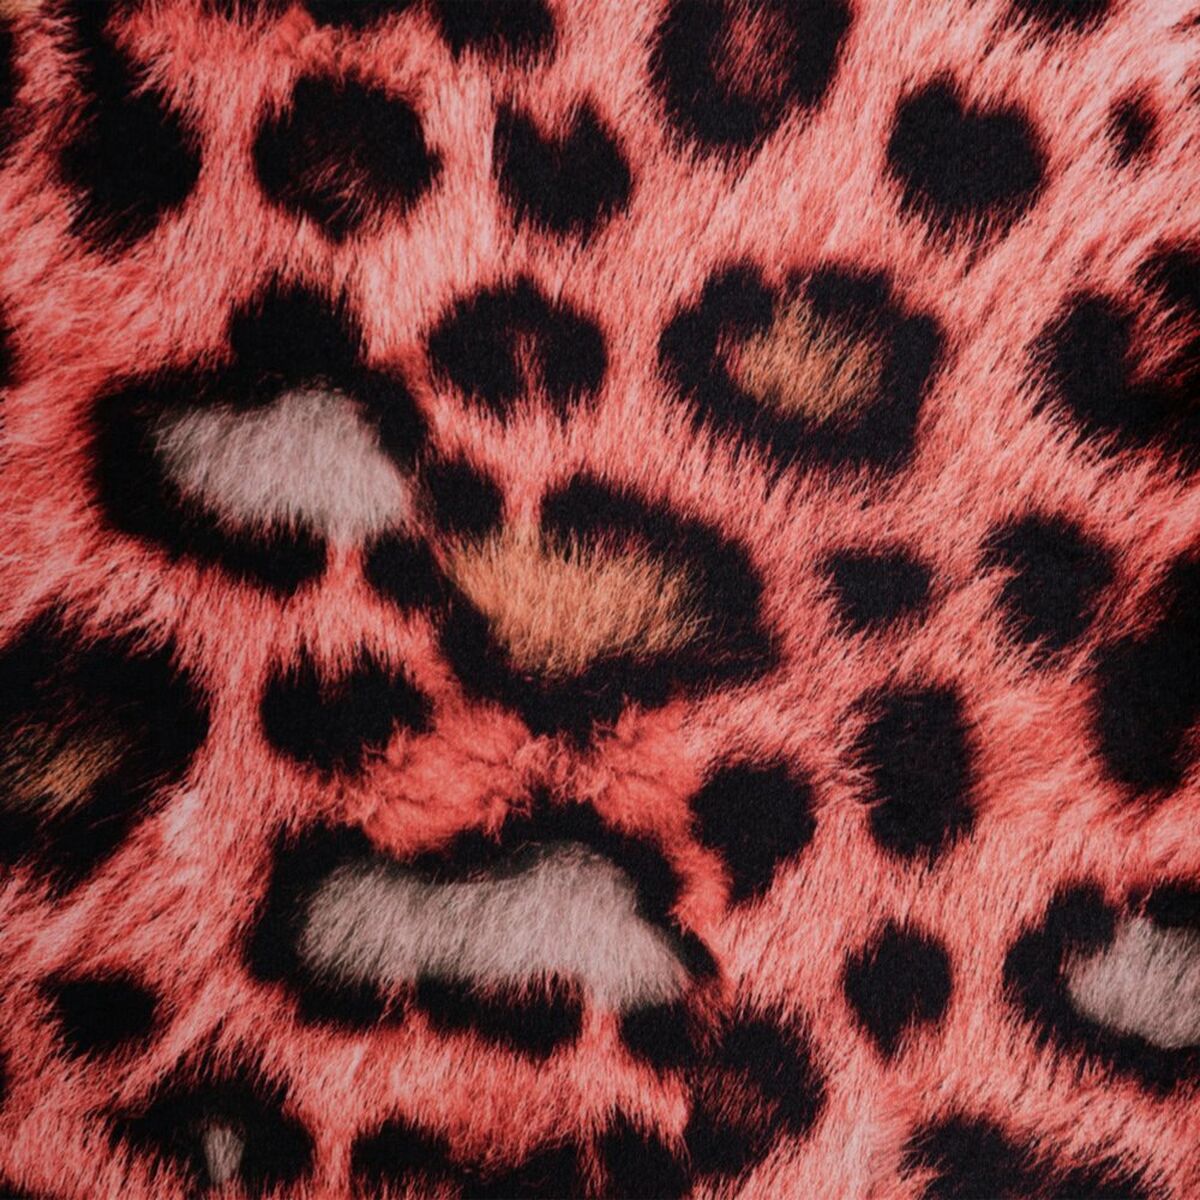 Kissen Orange Leopard 45 x 45 cm